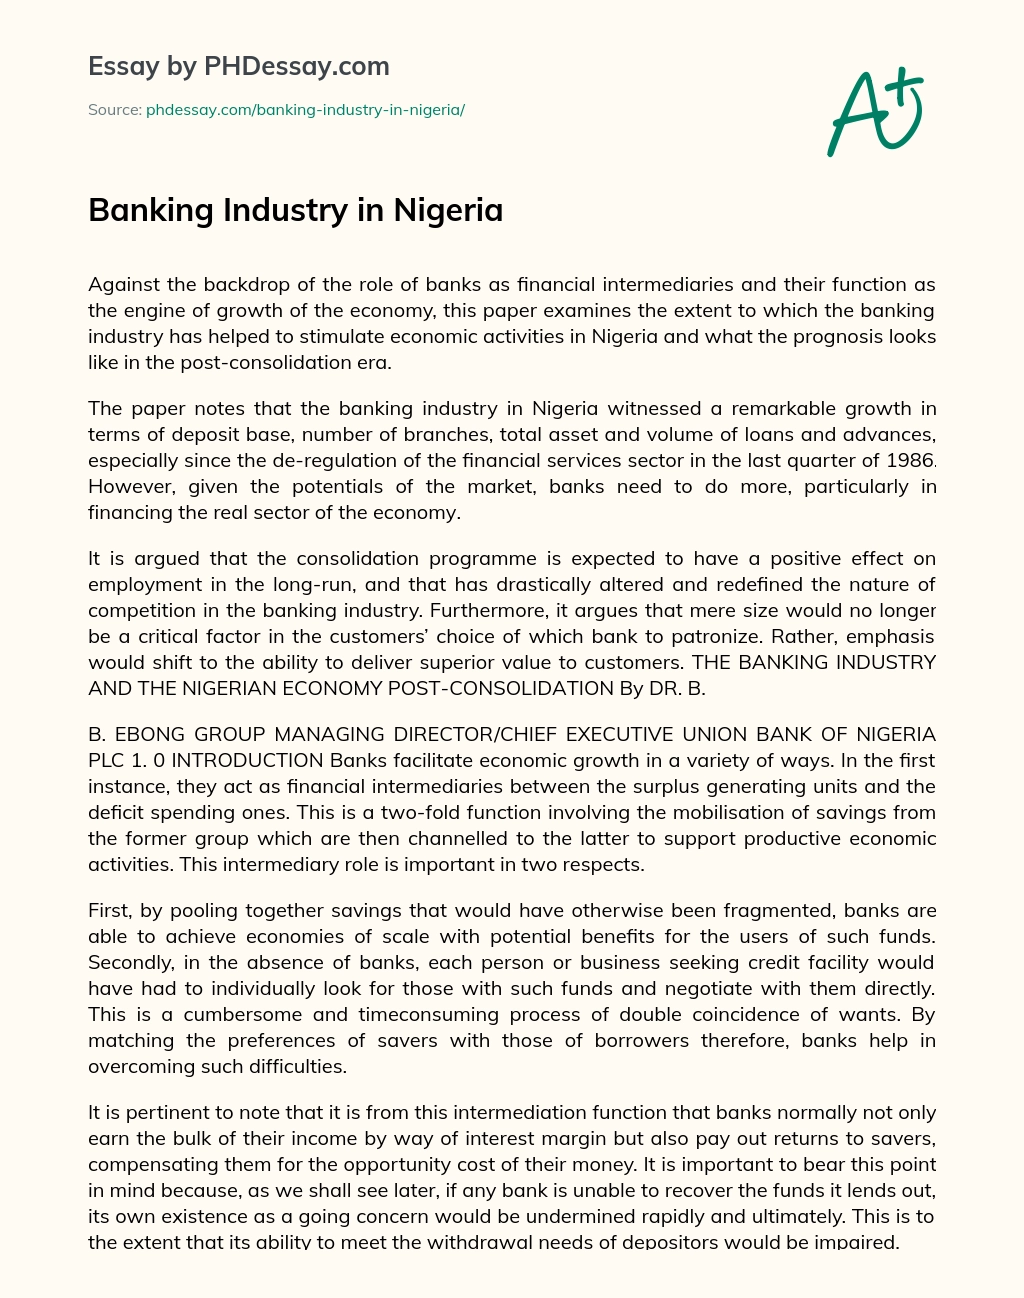 Banking Industry in Nigeria essay